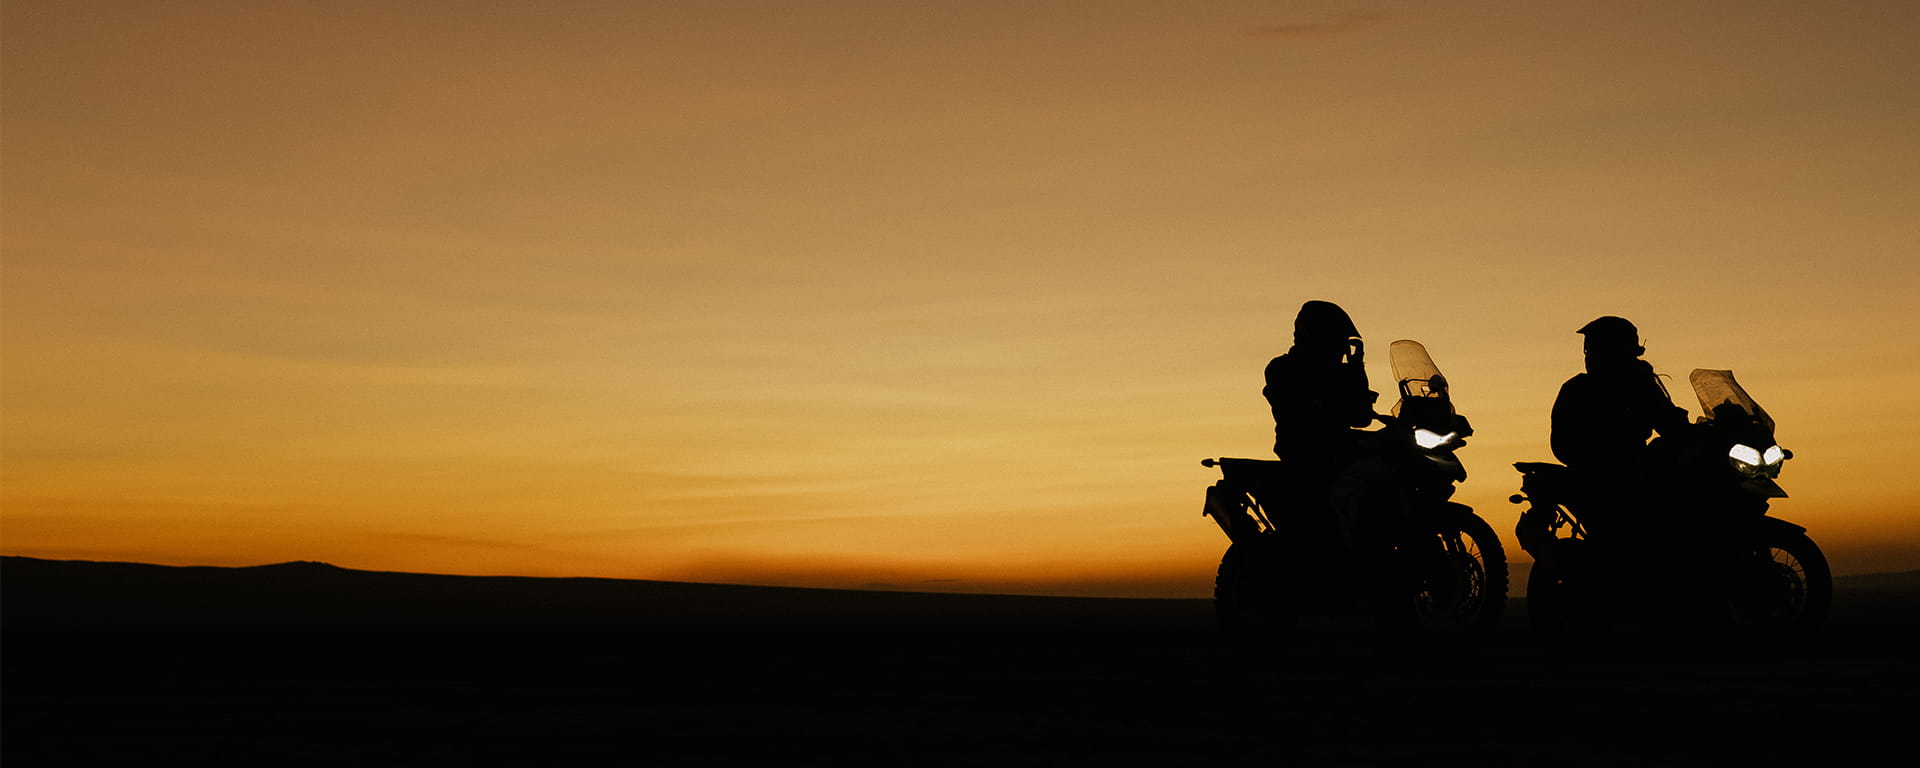 sunset-triumph-motorcycles